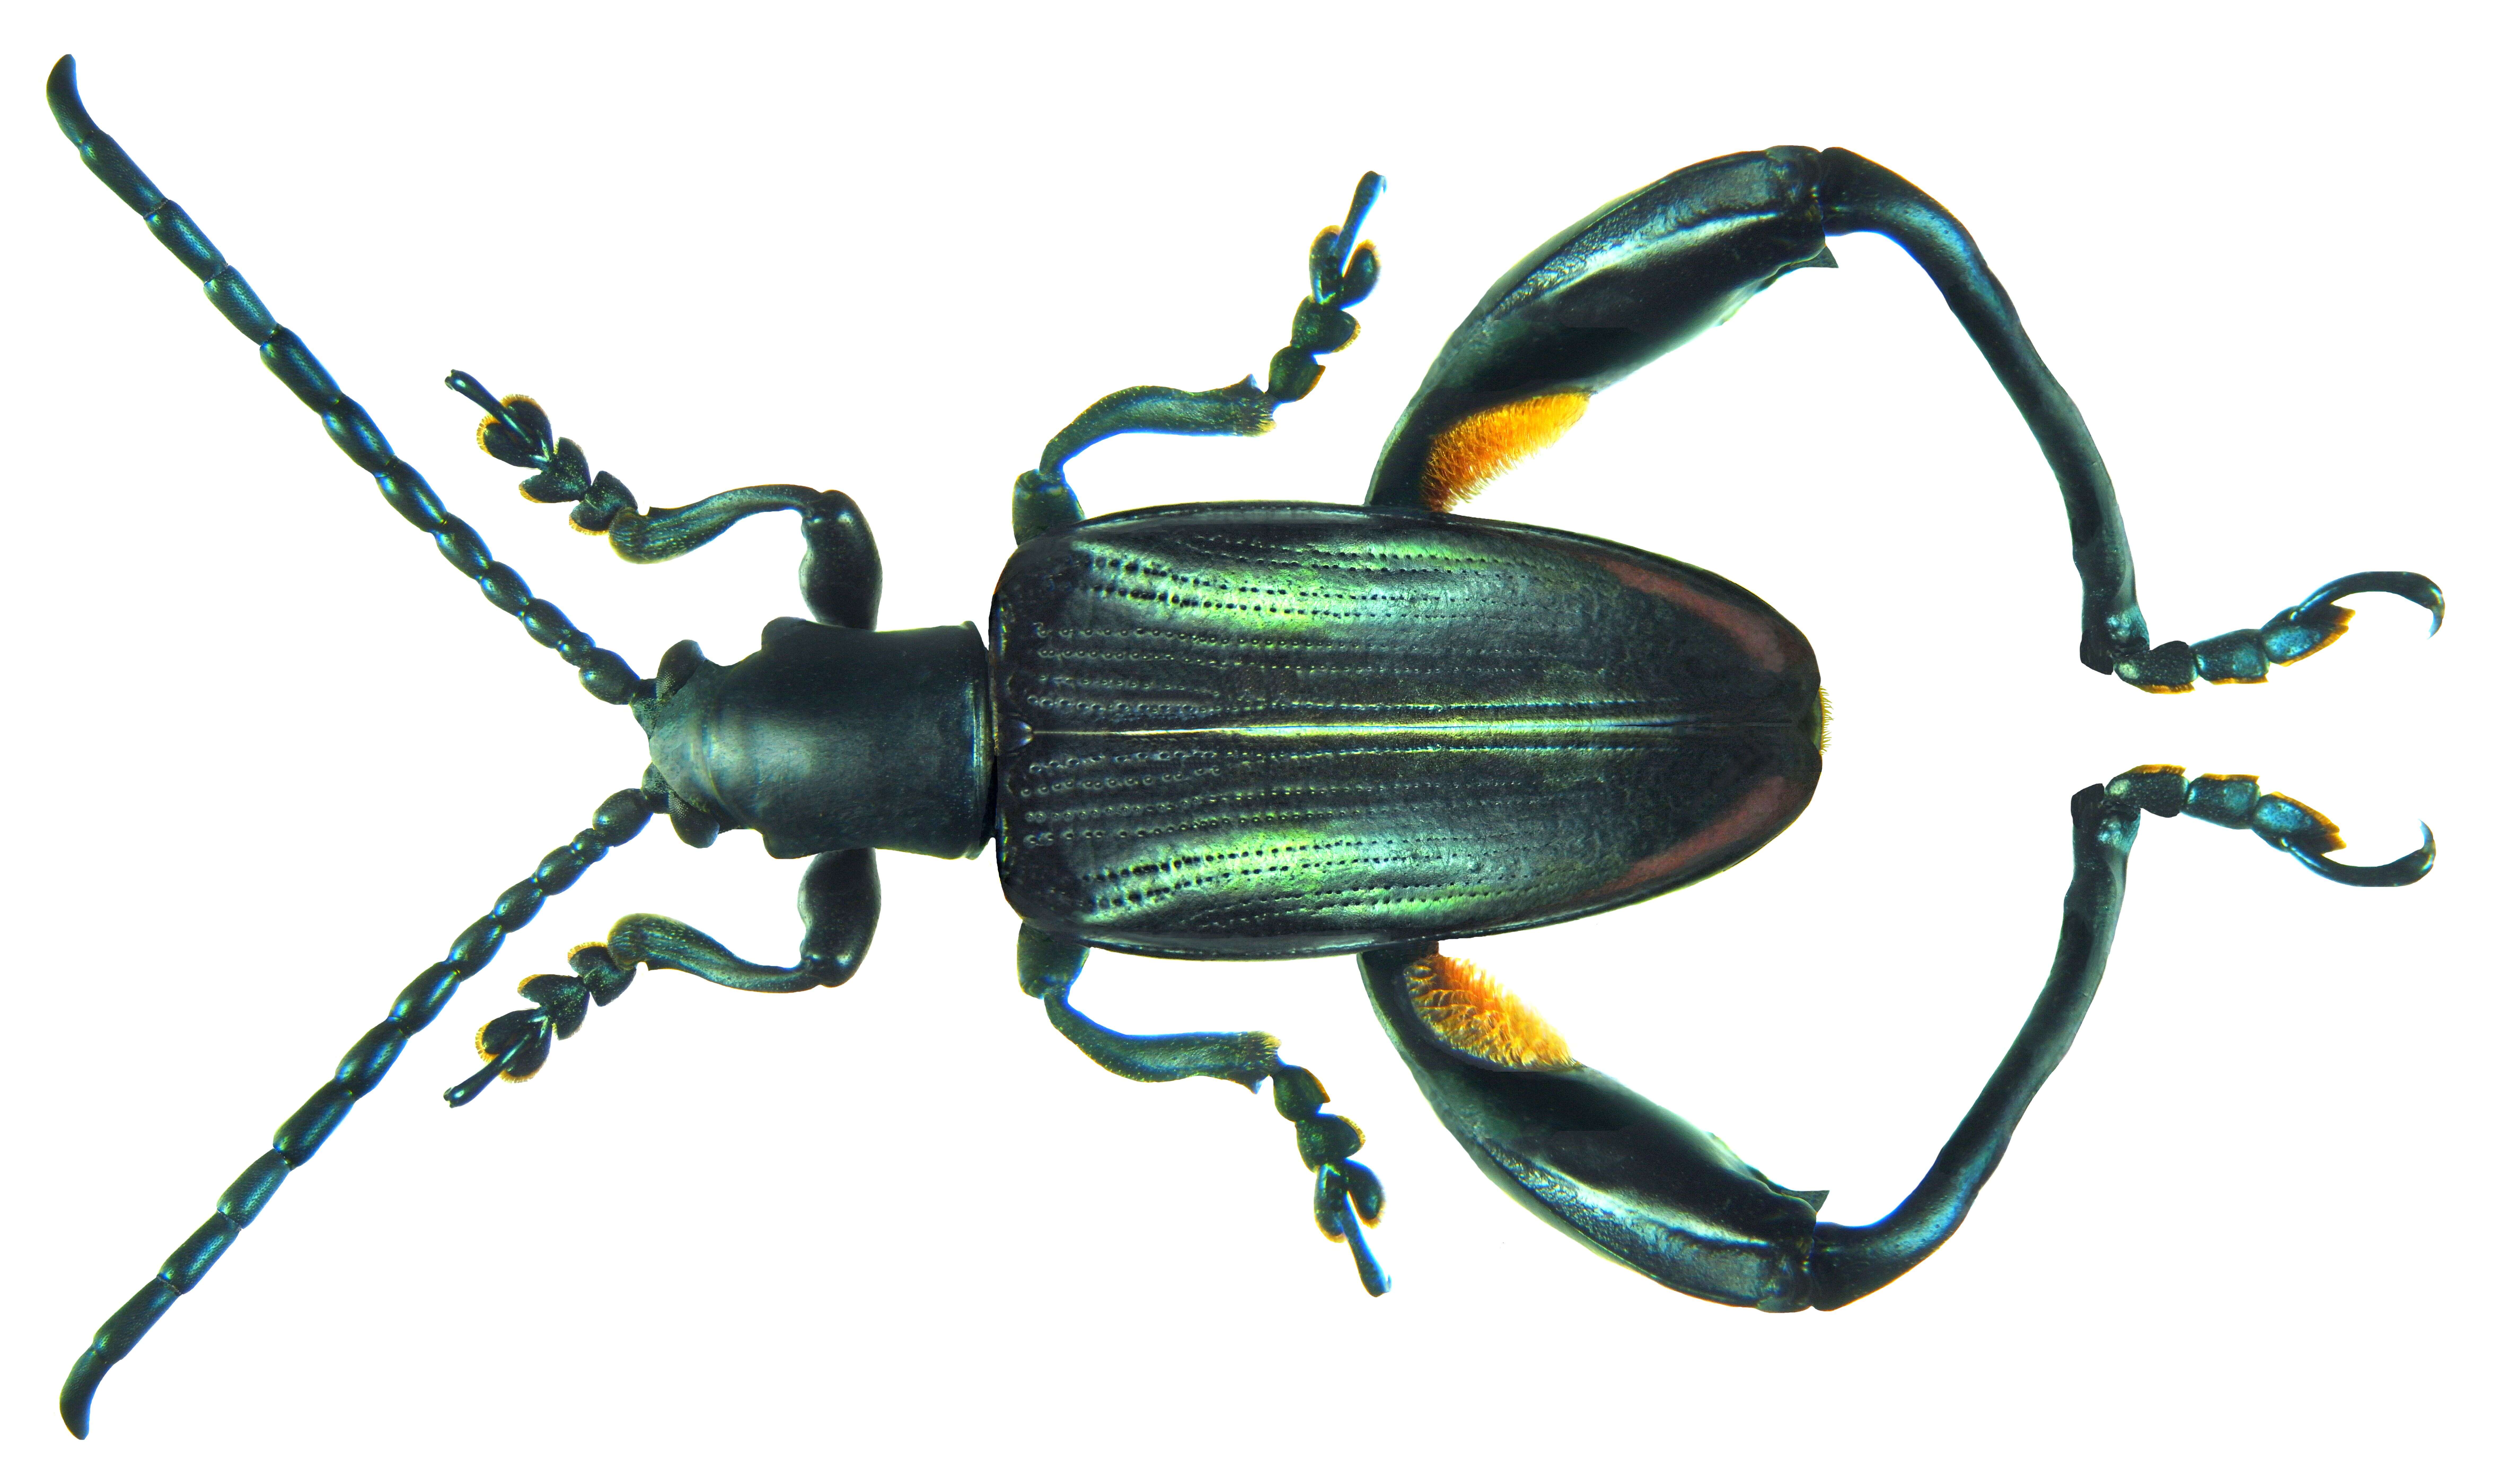 Image of frog beetles